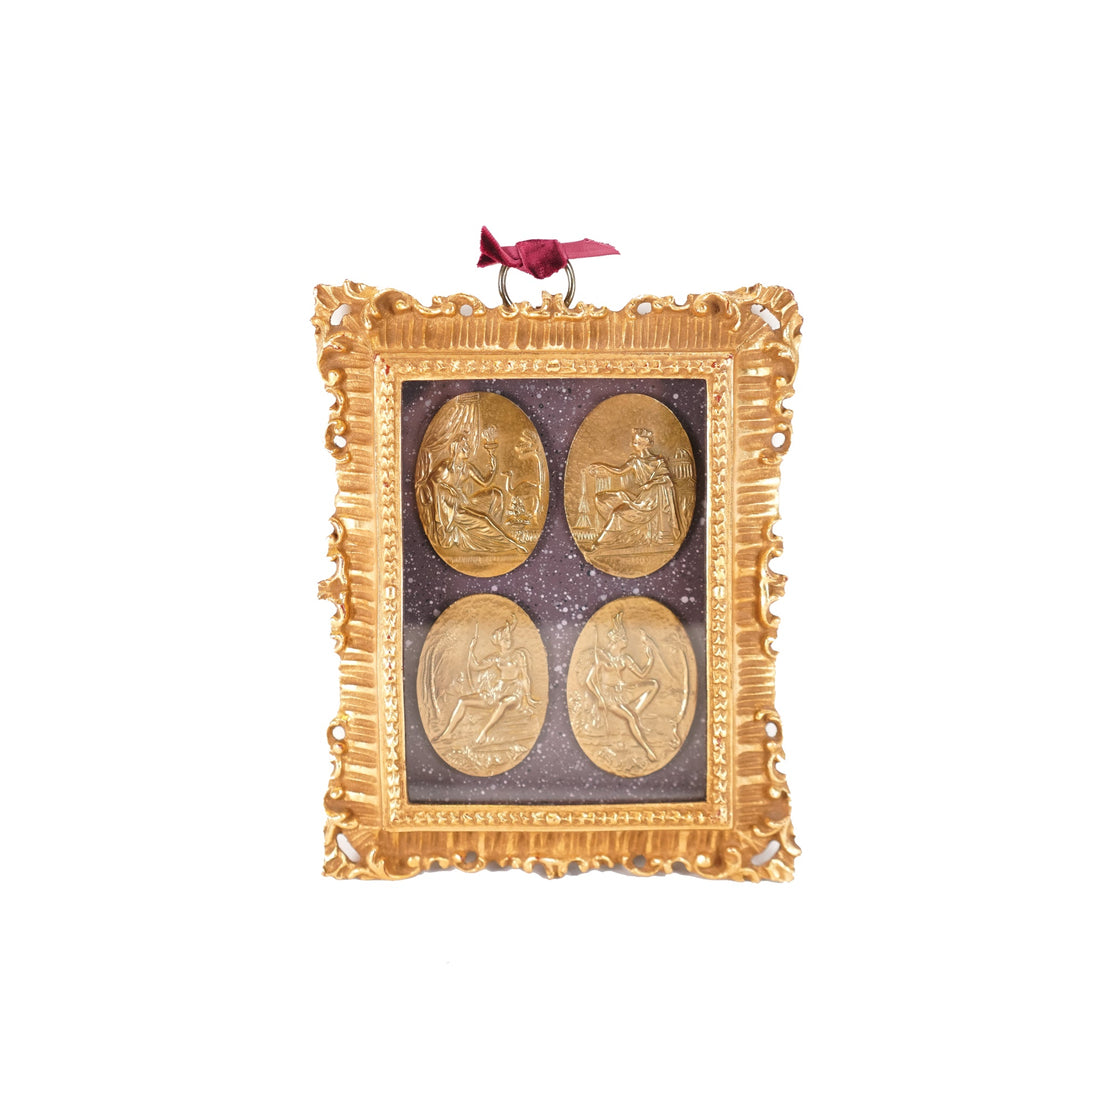 4 Carved Coins Framed in Golden Frame - Sirdab - Unknown